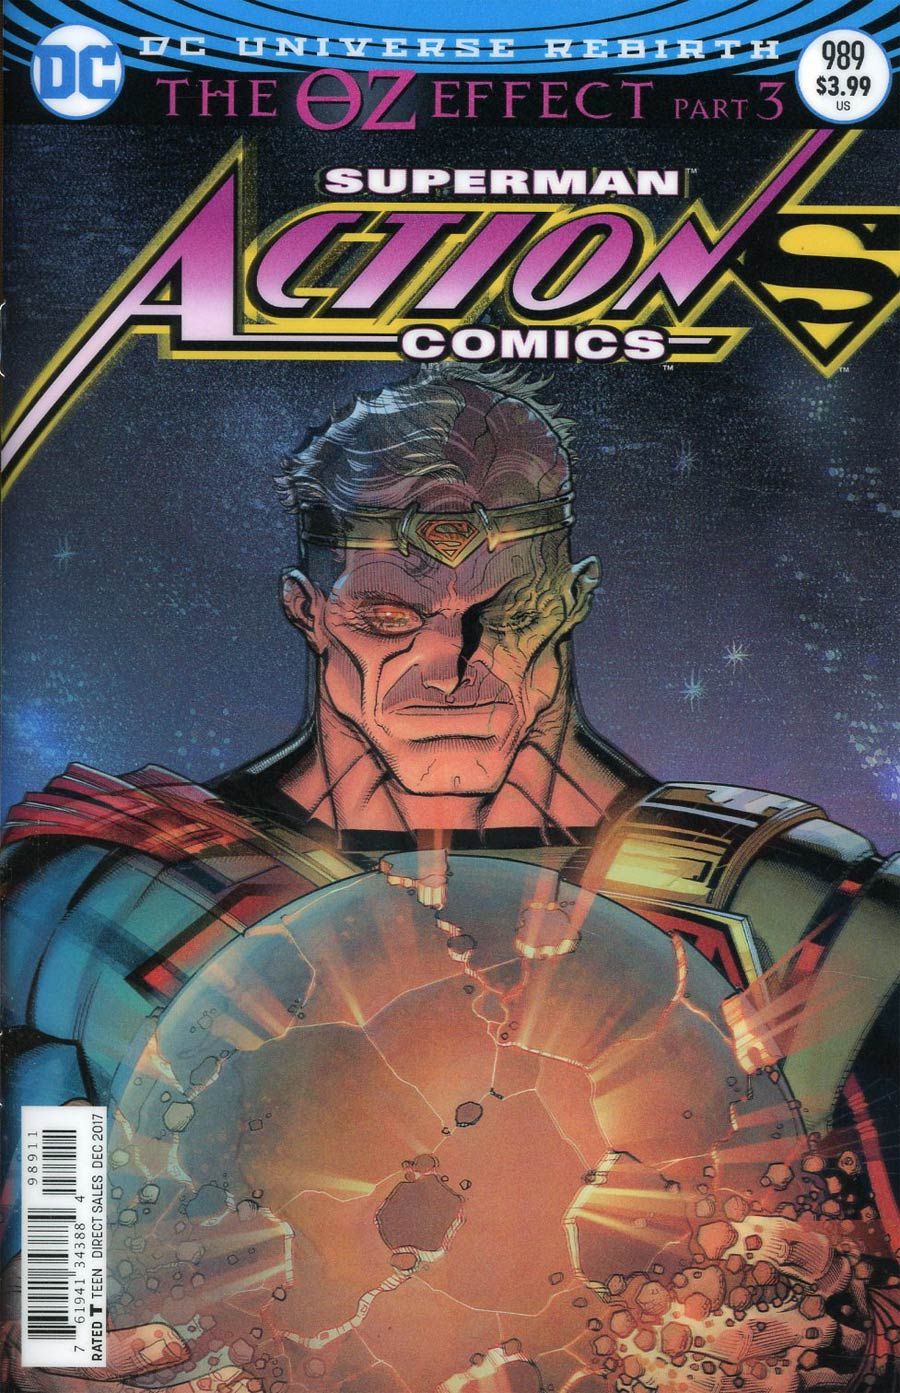 Action Comics #989 (Lenticular Standard Cover) Comic